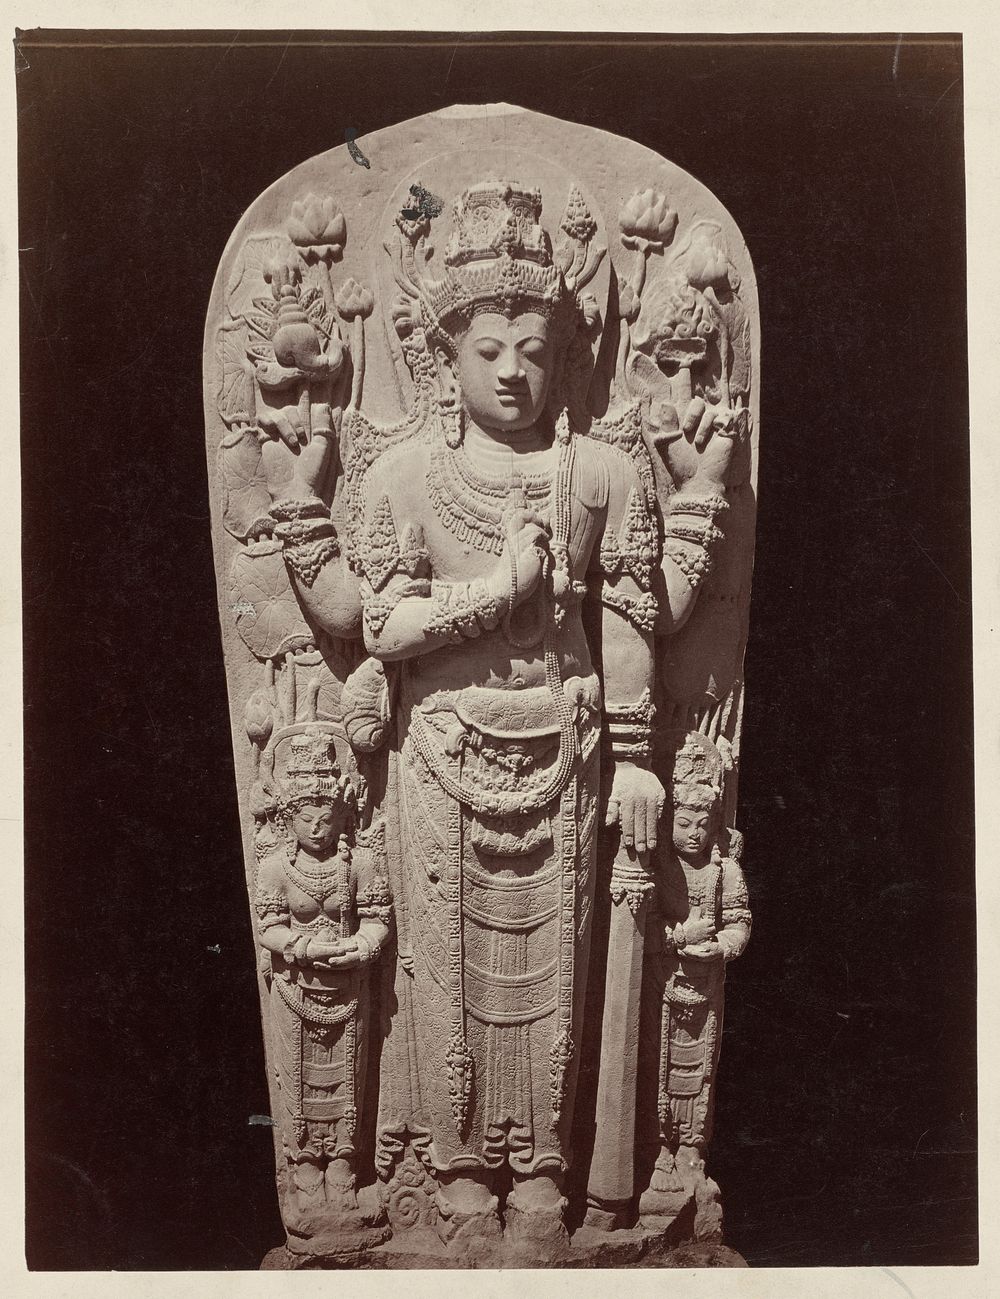 Four-armed deification stele (King Kritarajasa?) from Sumberjati showing features of both Vishnu and Shiva. Blitar, Blitar…